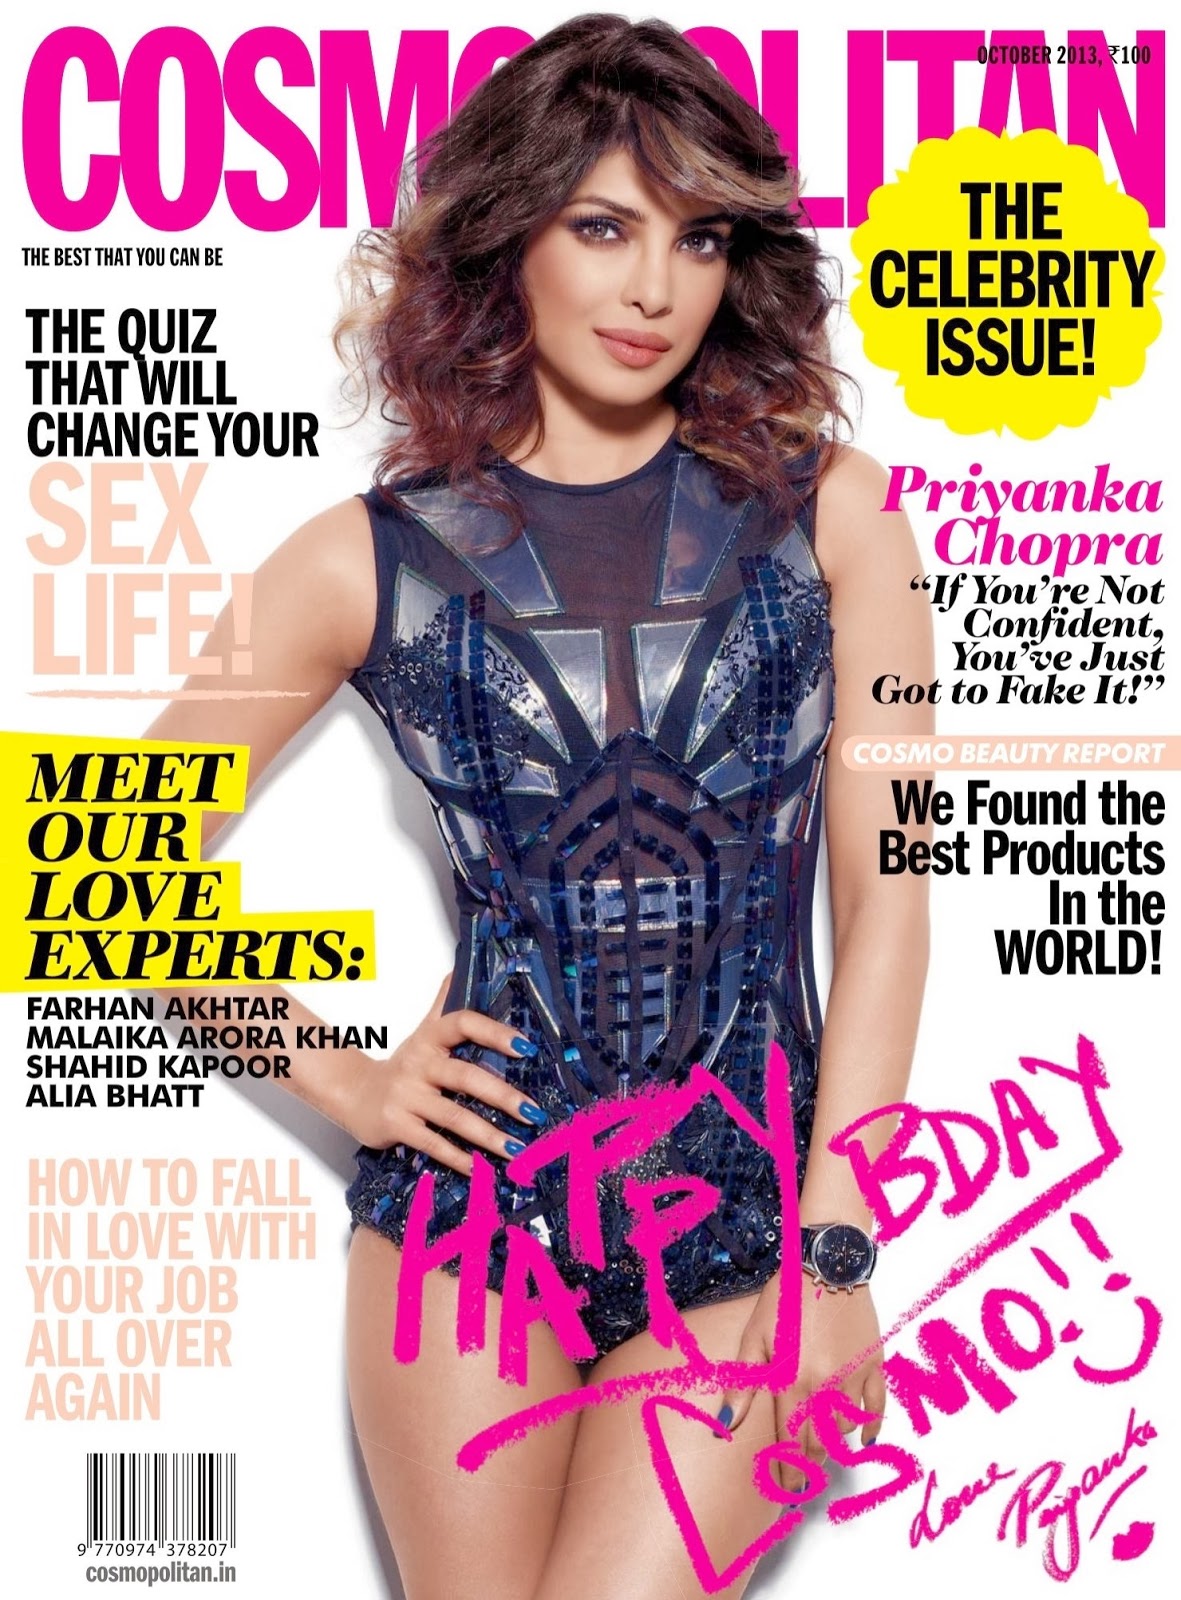 Cosmopolitan Magazine Covers 2013